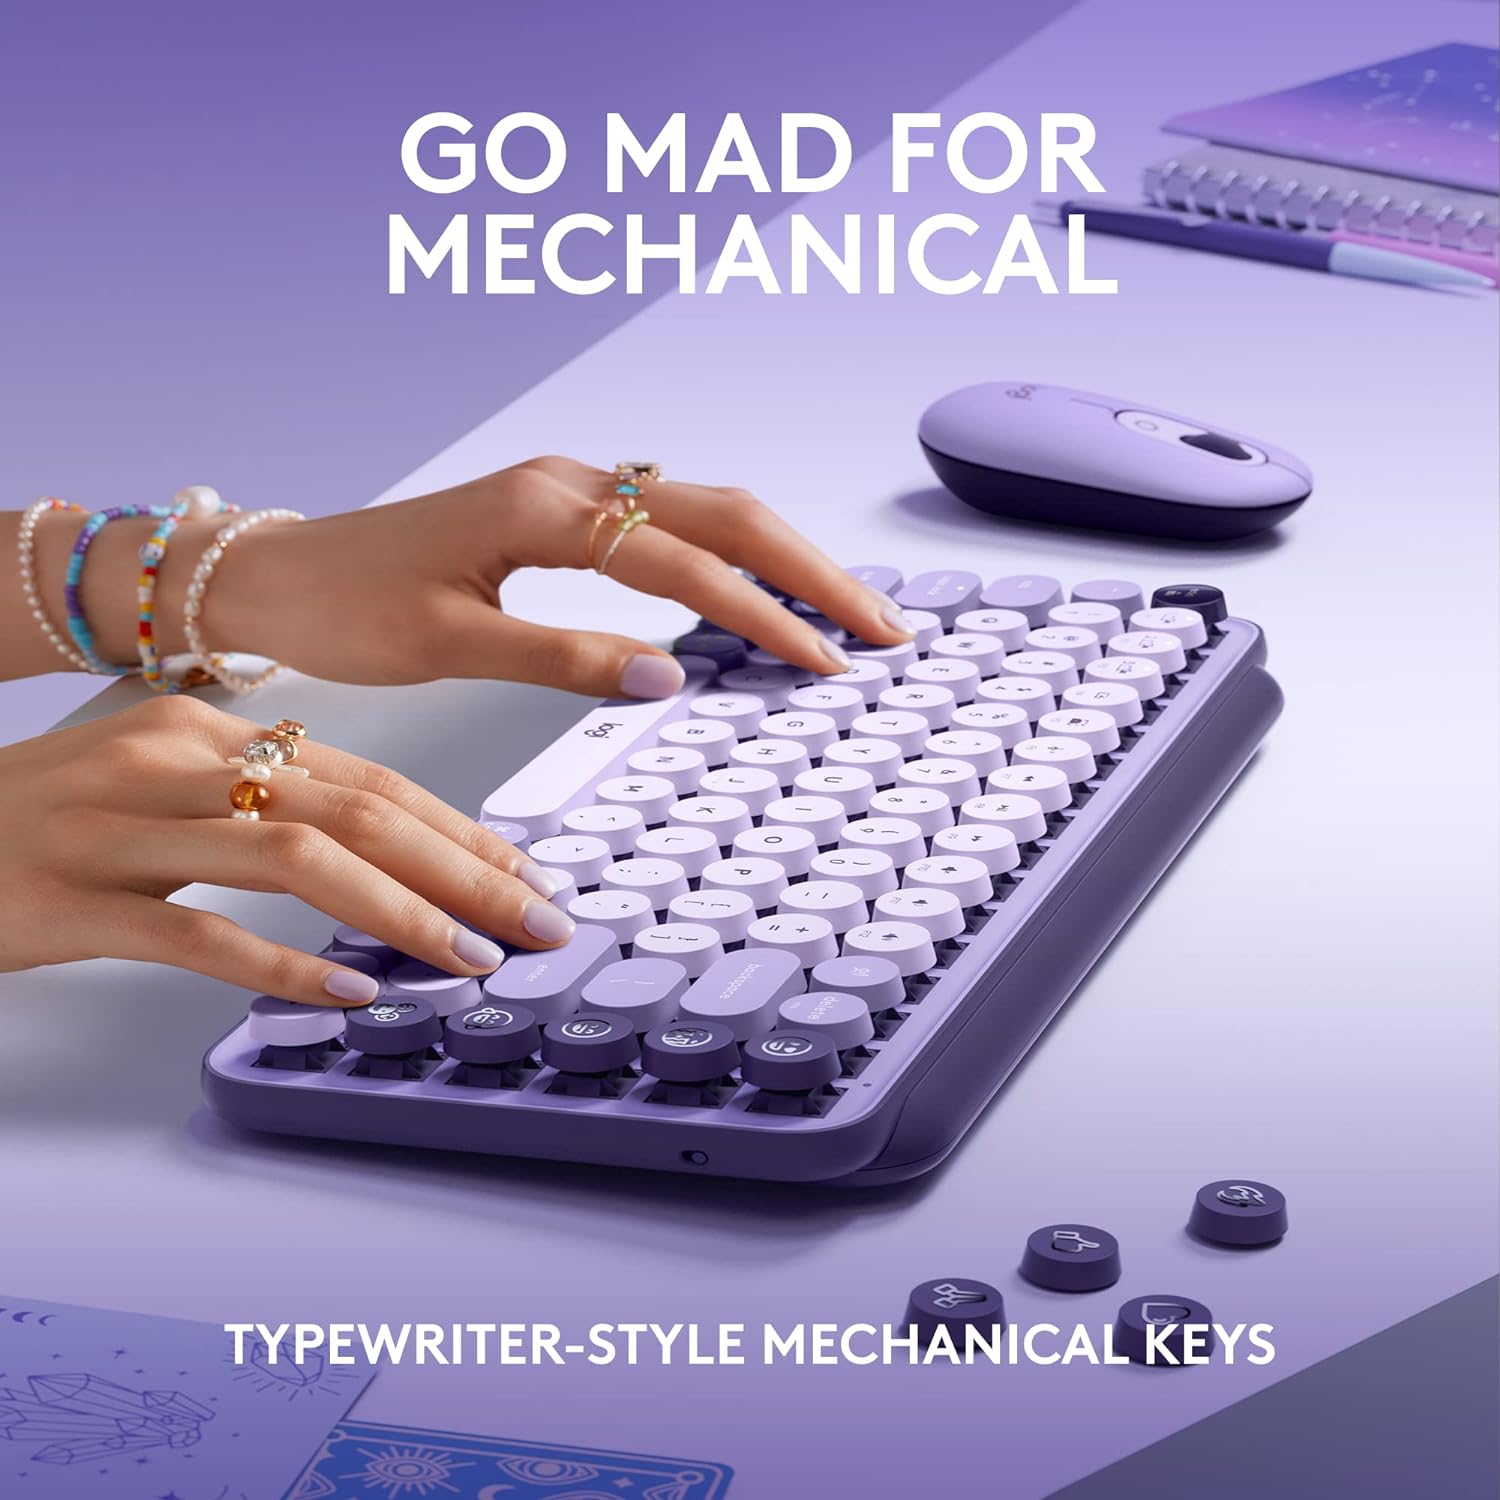 Logitech POP Keys Wireless and Bluetooth Mechanical Keyboard with Customizable Emoji Keys